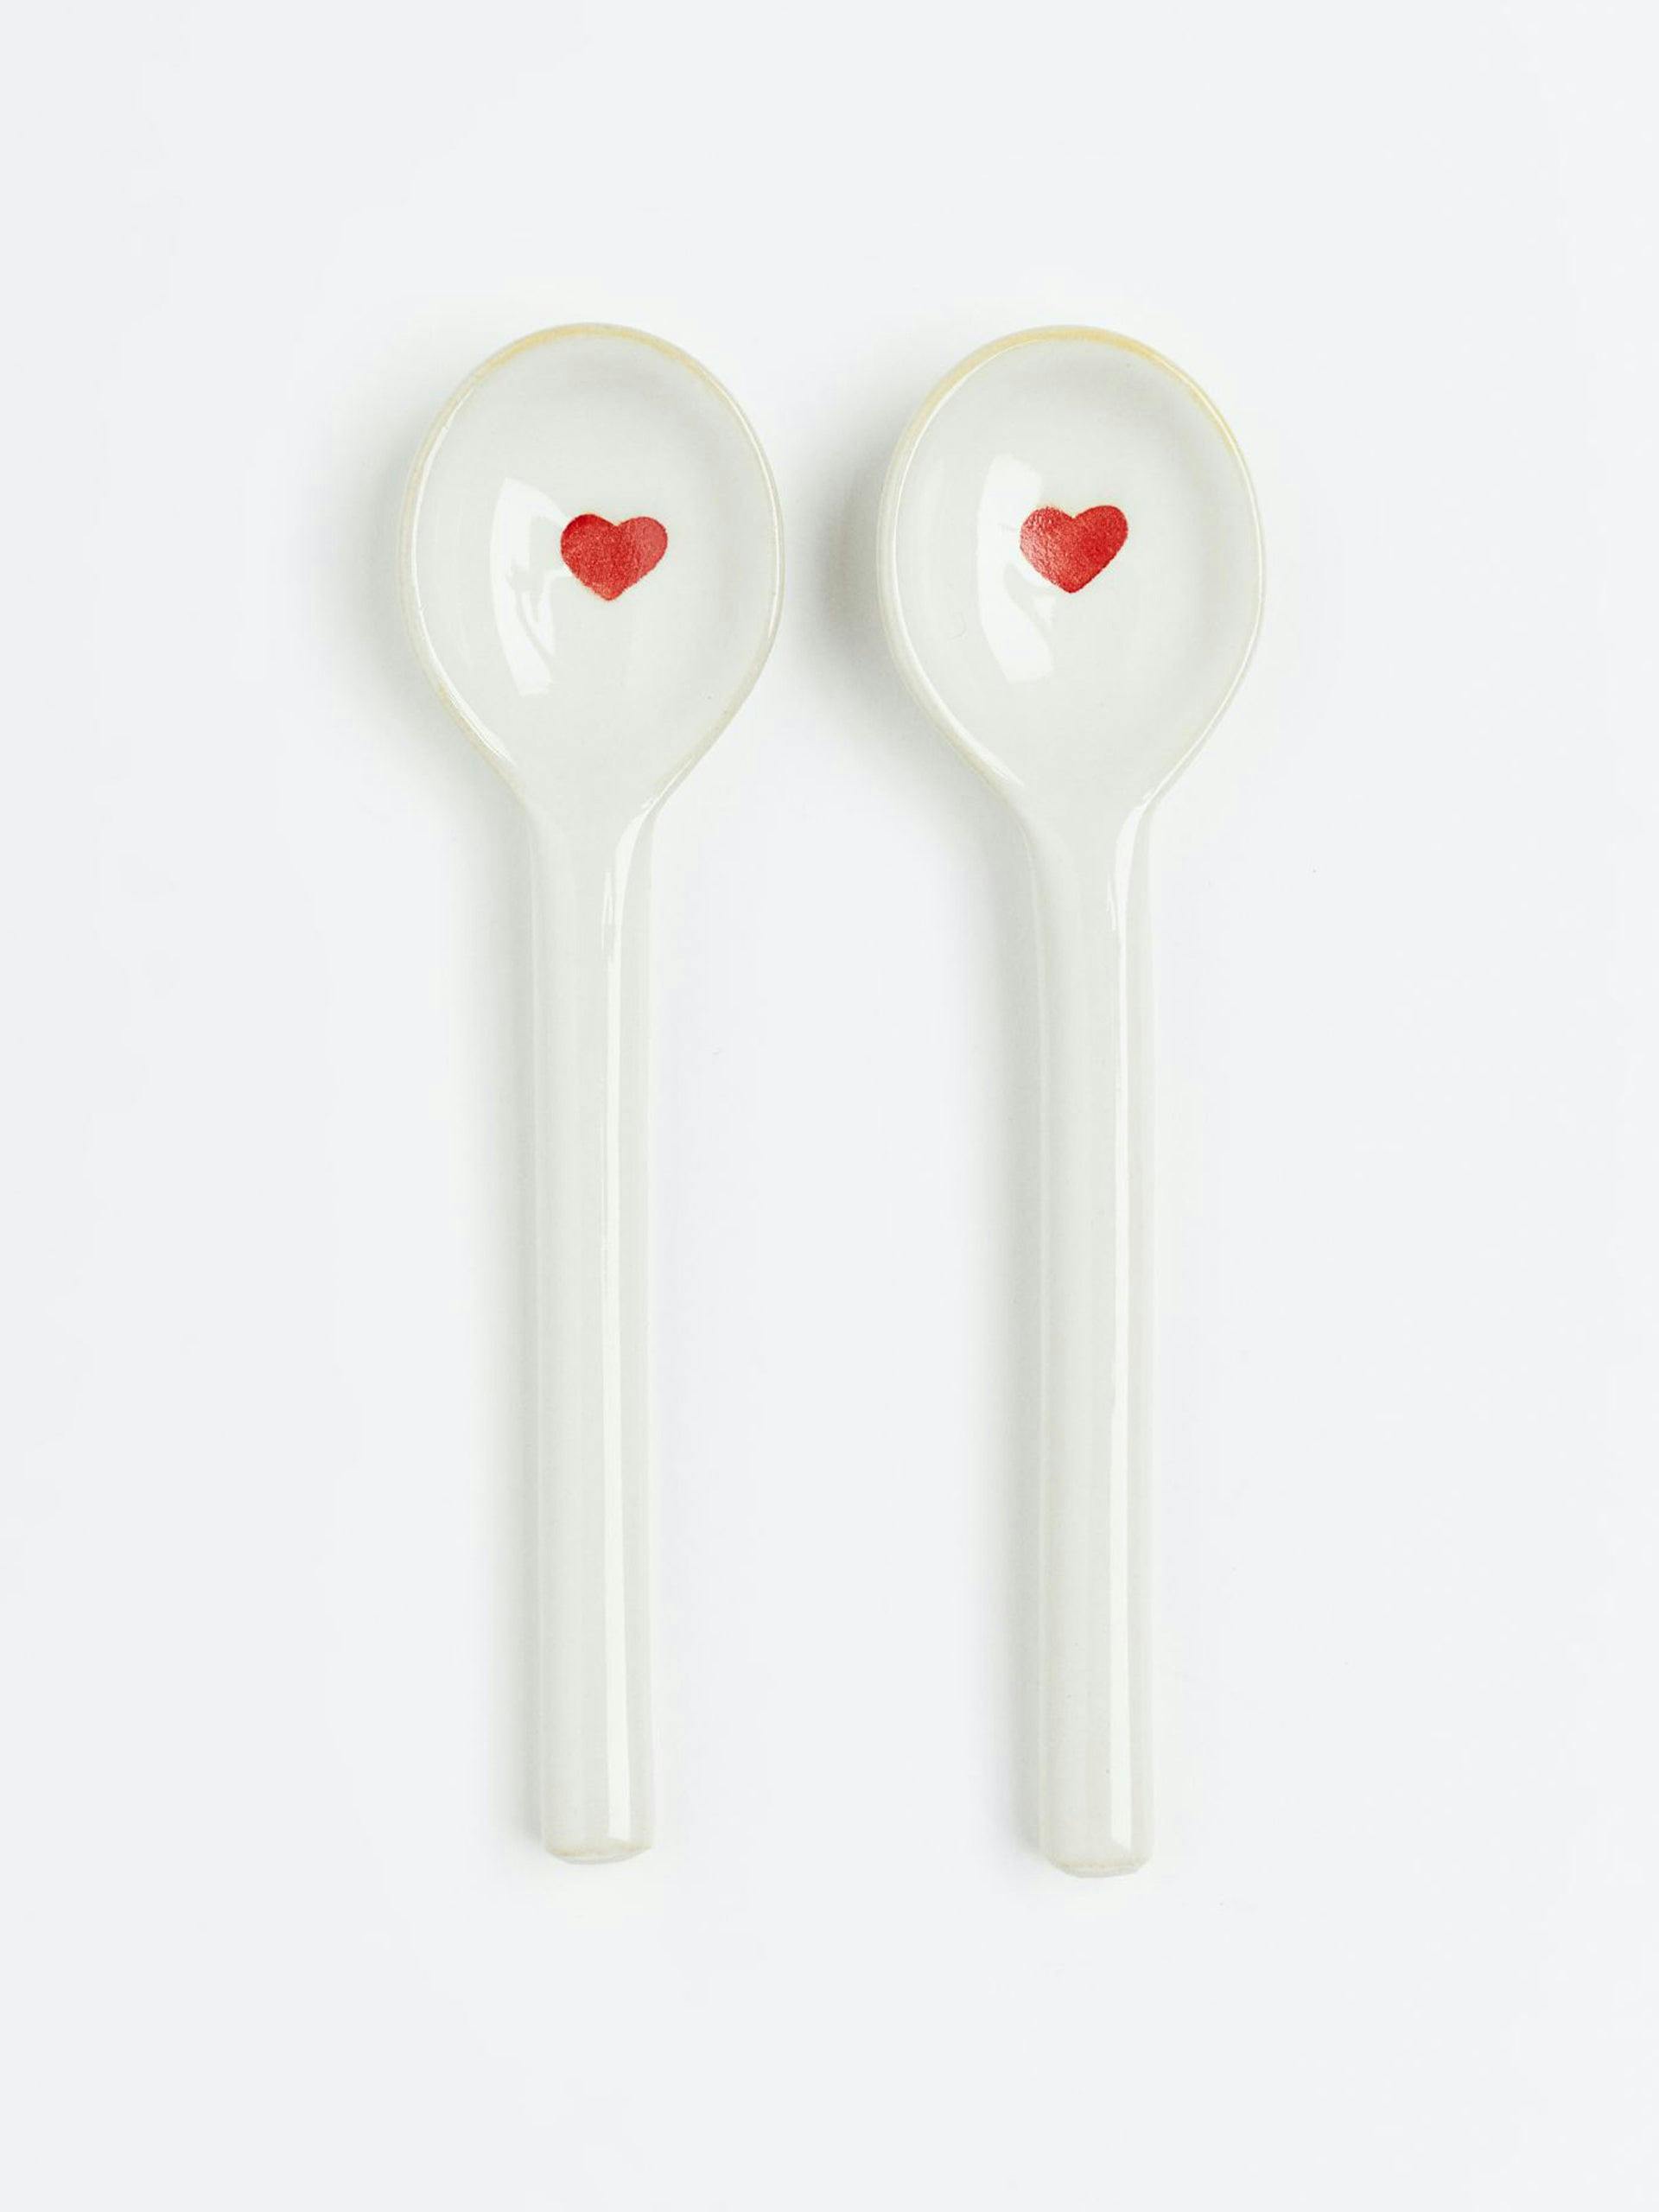 White heart teaspoons (set of two)